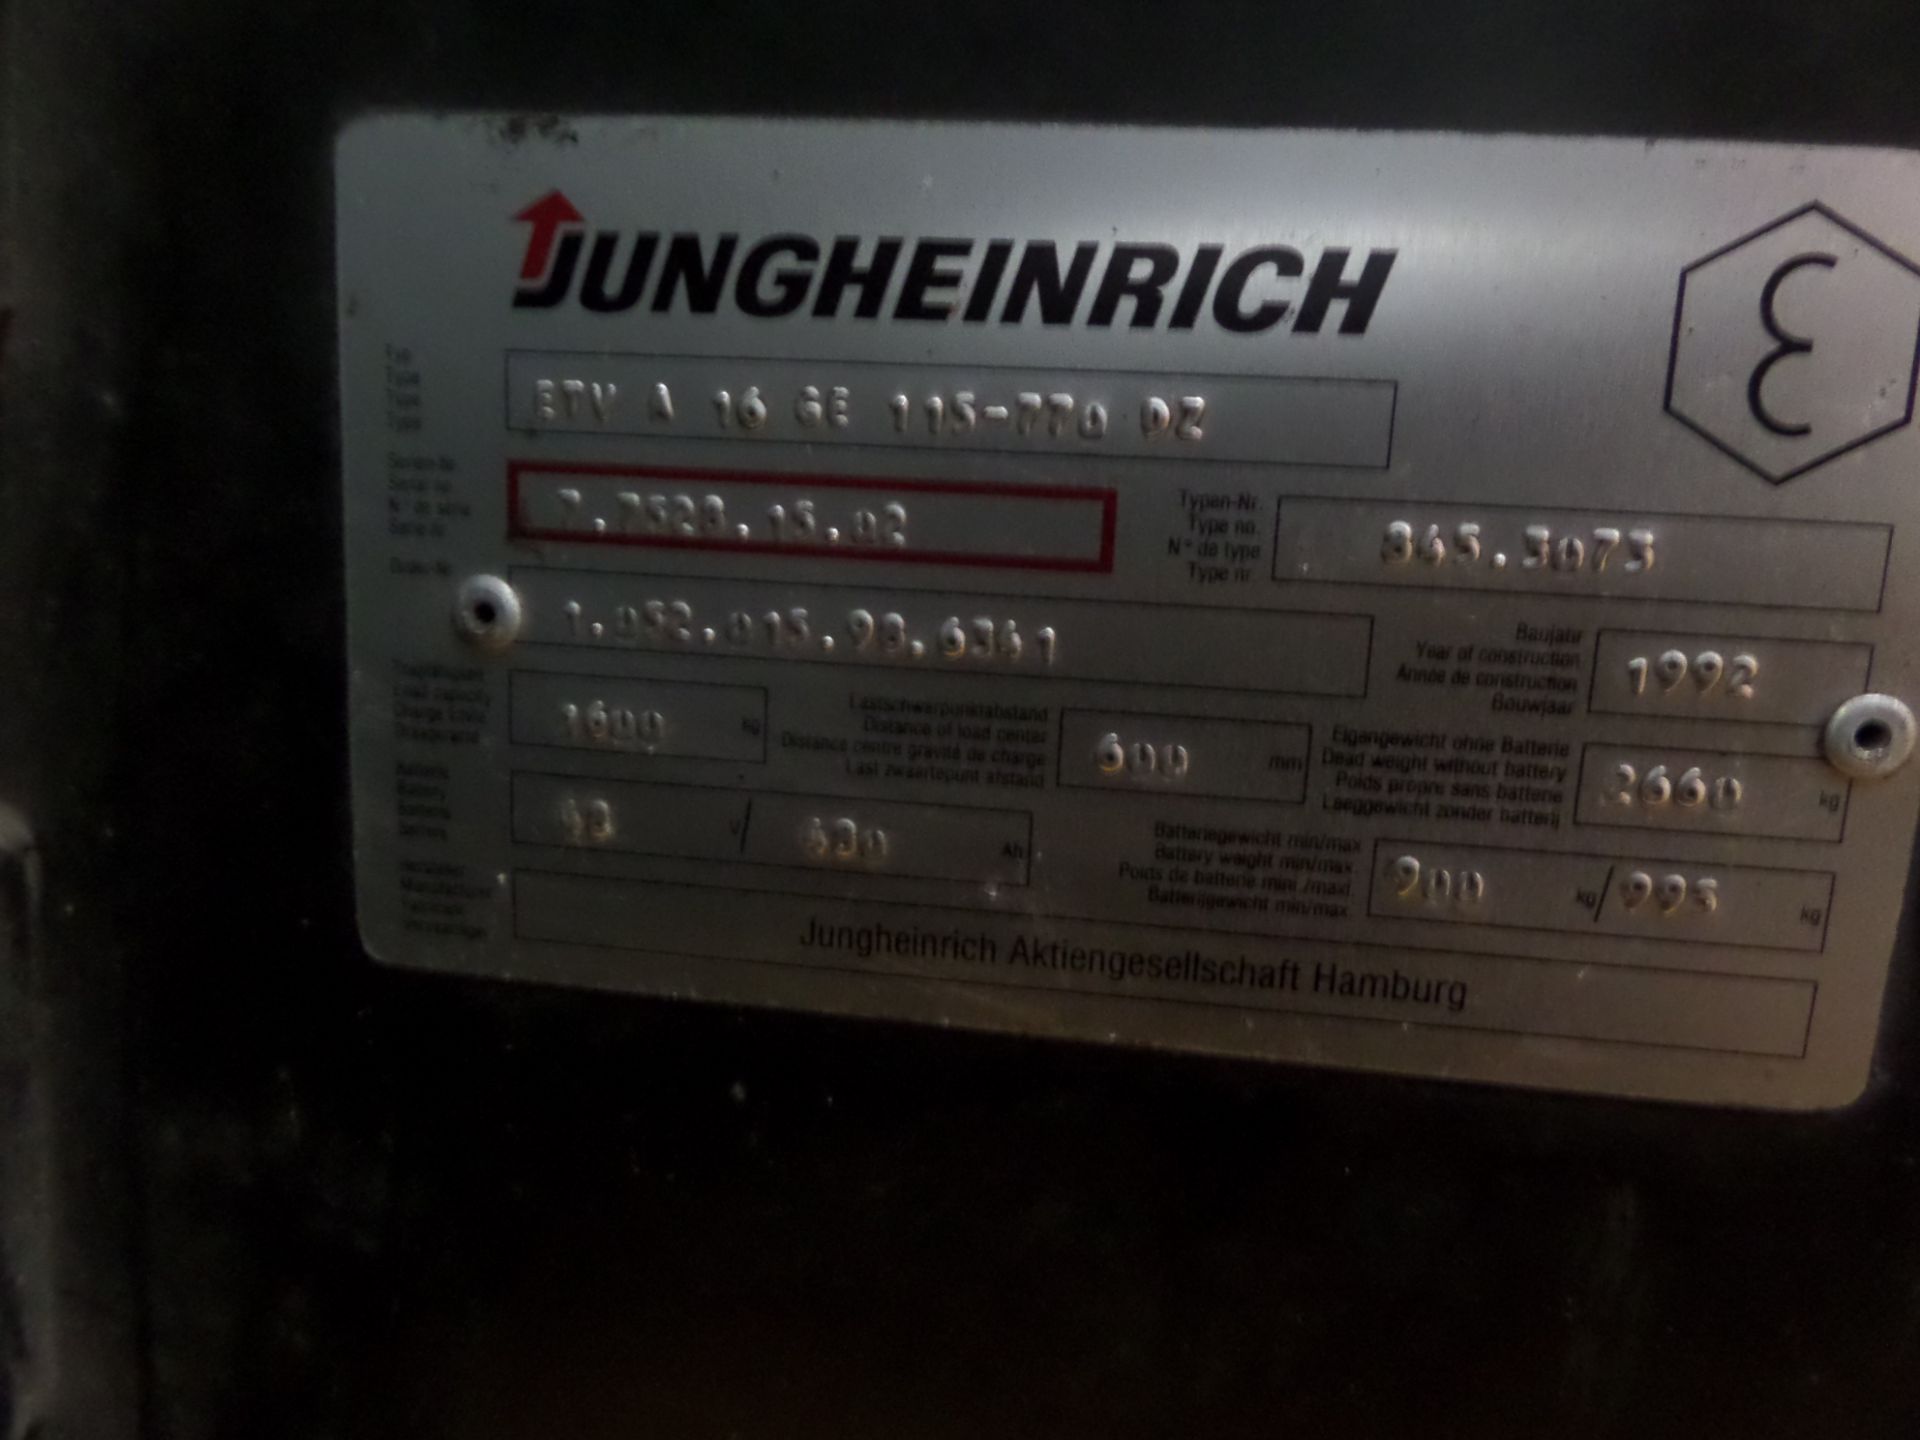 JUNGHEIRICH ETVA16 GE115770D2 Plant Electric - VIN: 775281502 - Year: 1992 - . Hours - Triplex Reach - Image 8 of 8